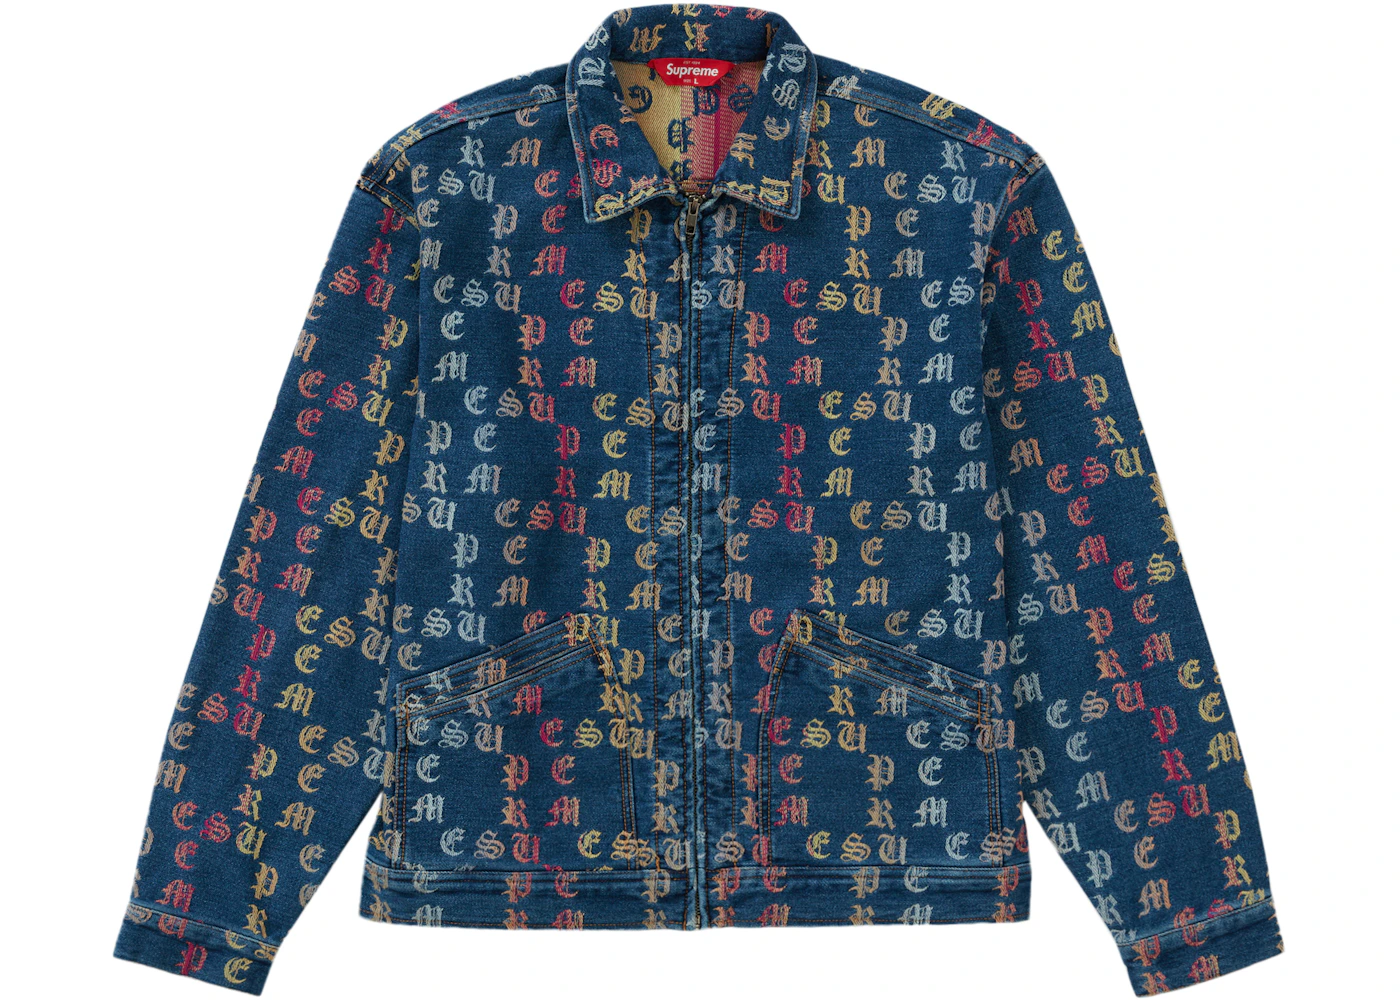 Supreme Gradient Jacquard Denim Work Jacket in Blue, Size Large - Outerwear